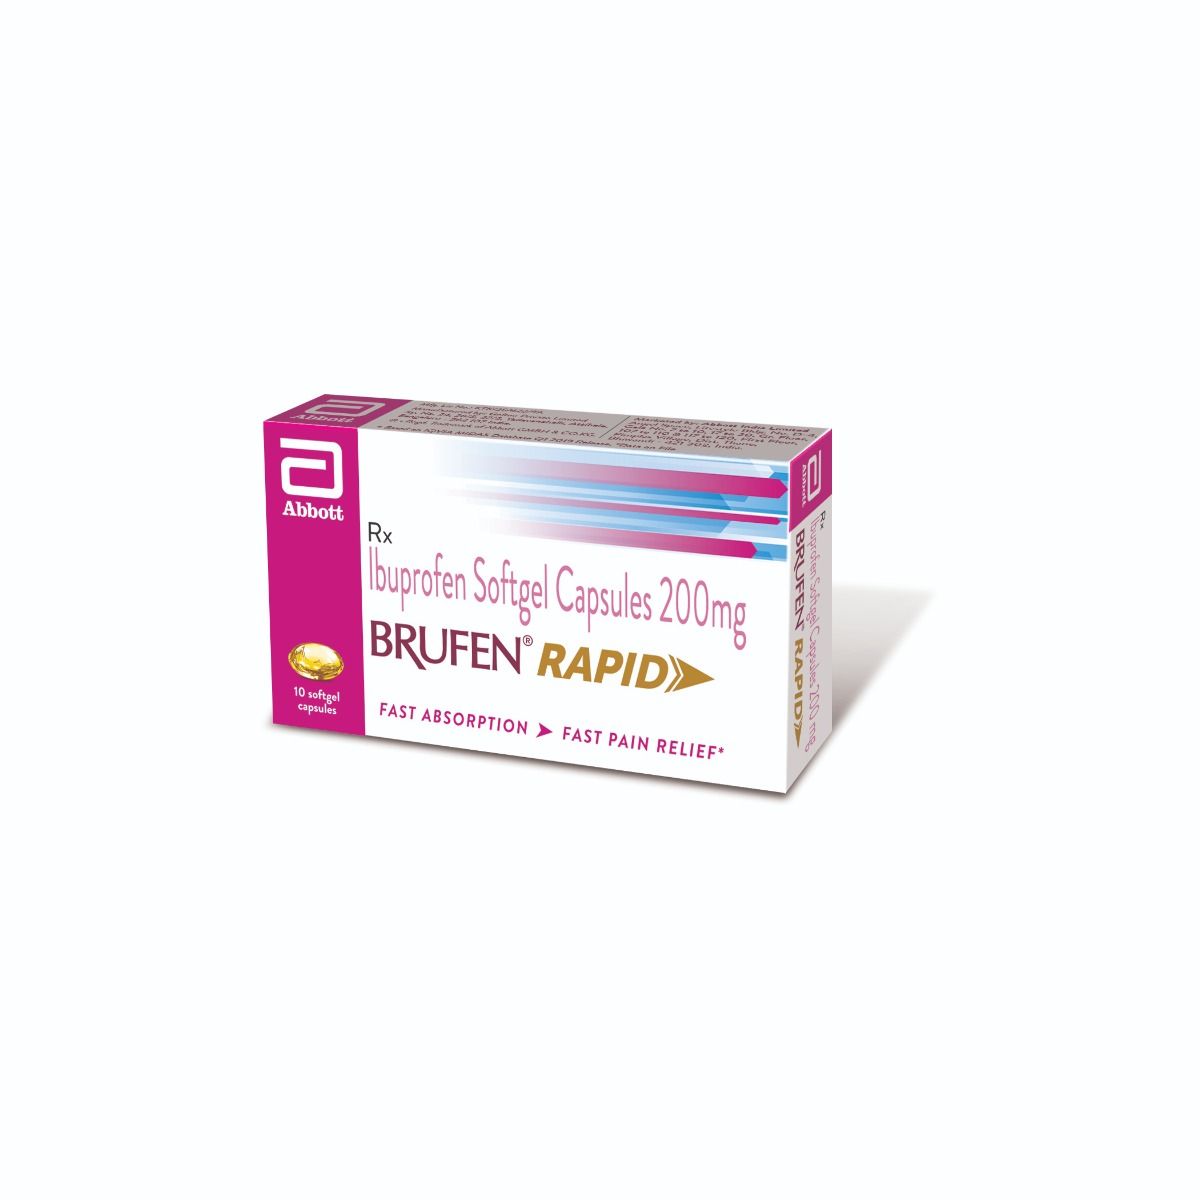 Buy Brufen Rapid 200 mg, 10 Capsules Online